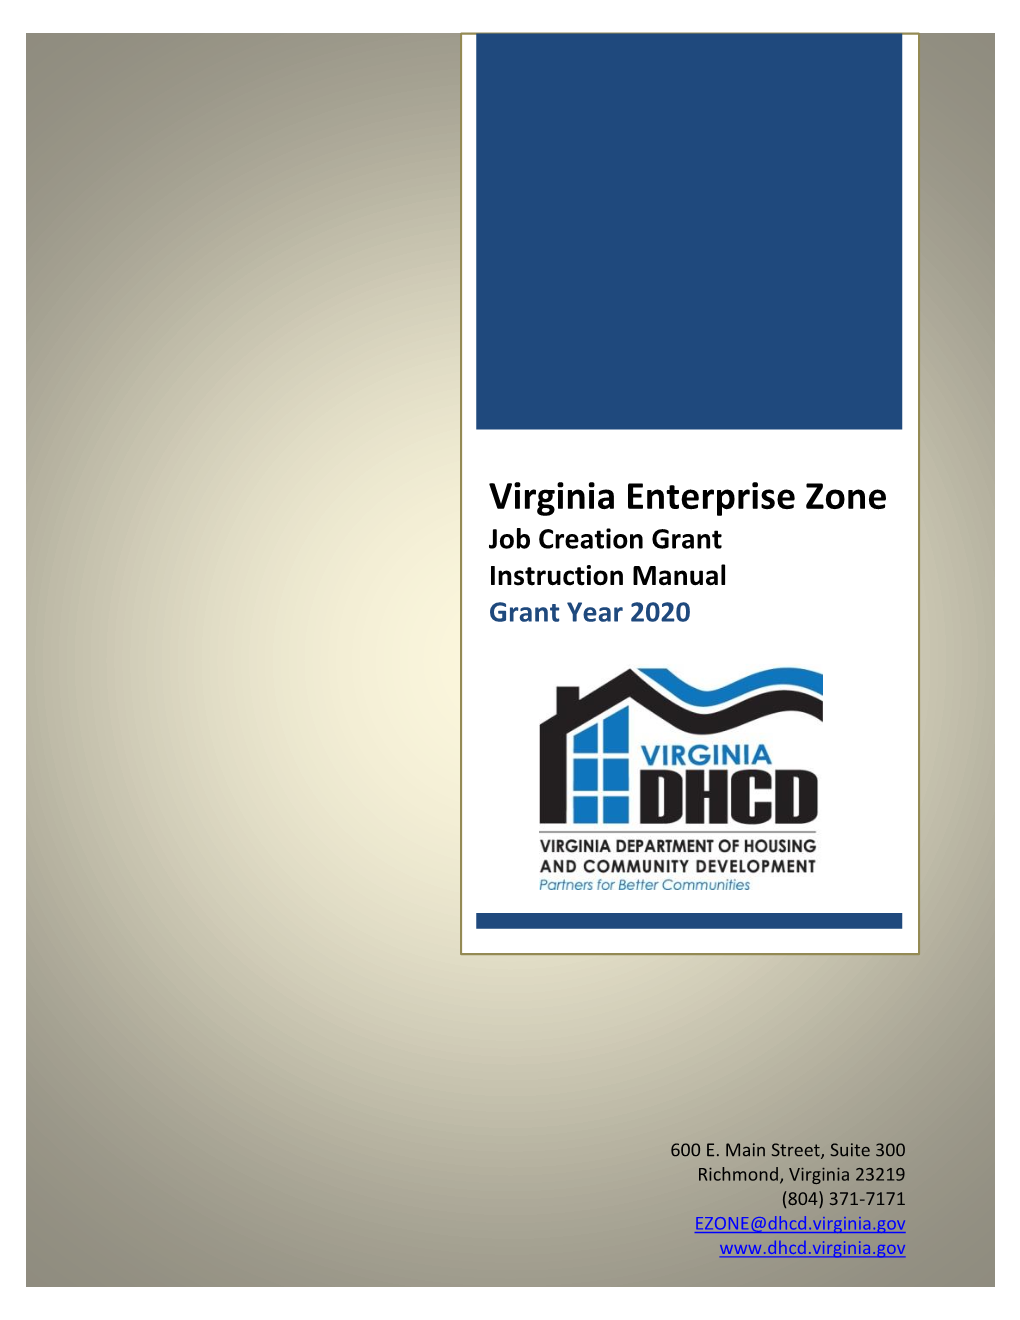 Virginia Enterprise Zone Job Creation Grant Instruction Manual Grant Year 2020